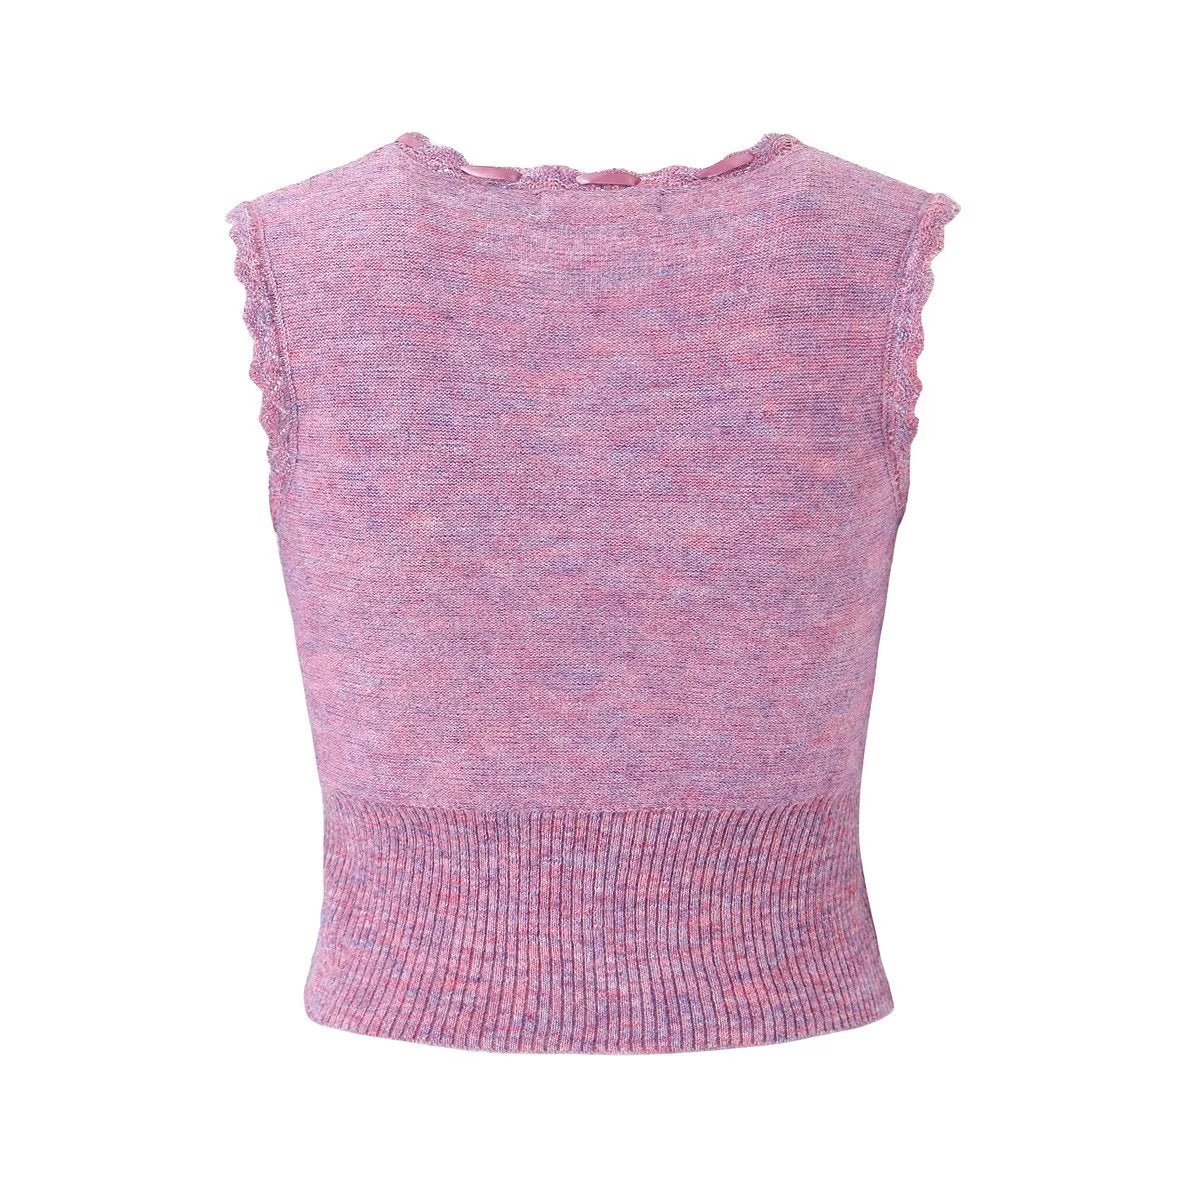 2 Piece Set: Blended Knitted Vest Top Wide Waist Skirt Set